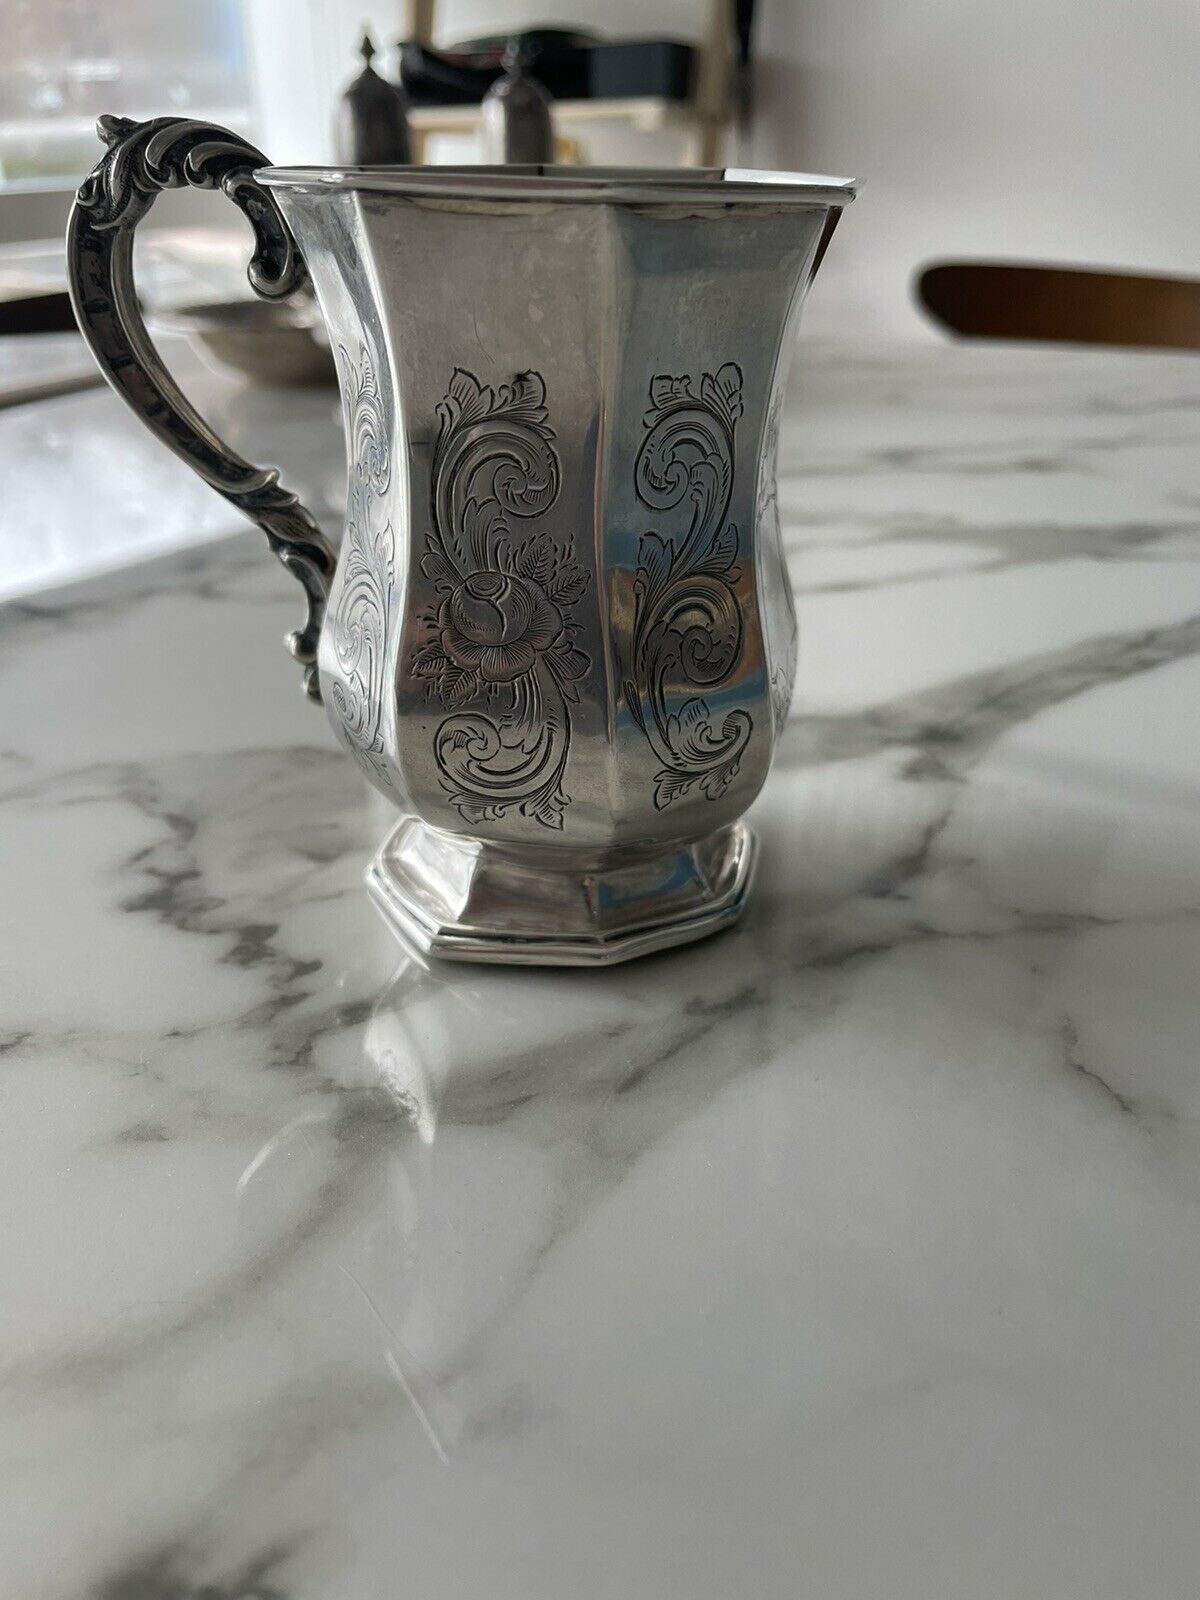 Hillard & Thomason English Birmingham  Georgian Sterling Silver Mug Cup 1856